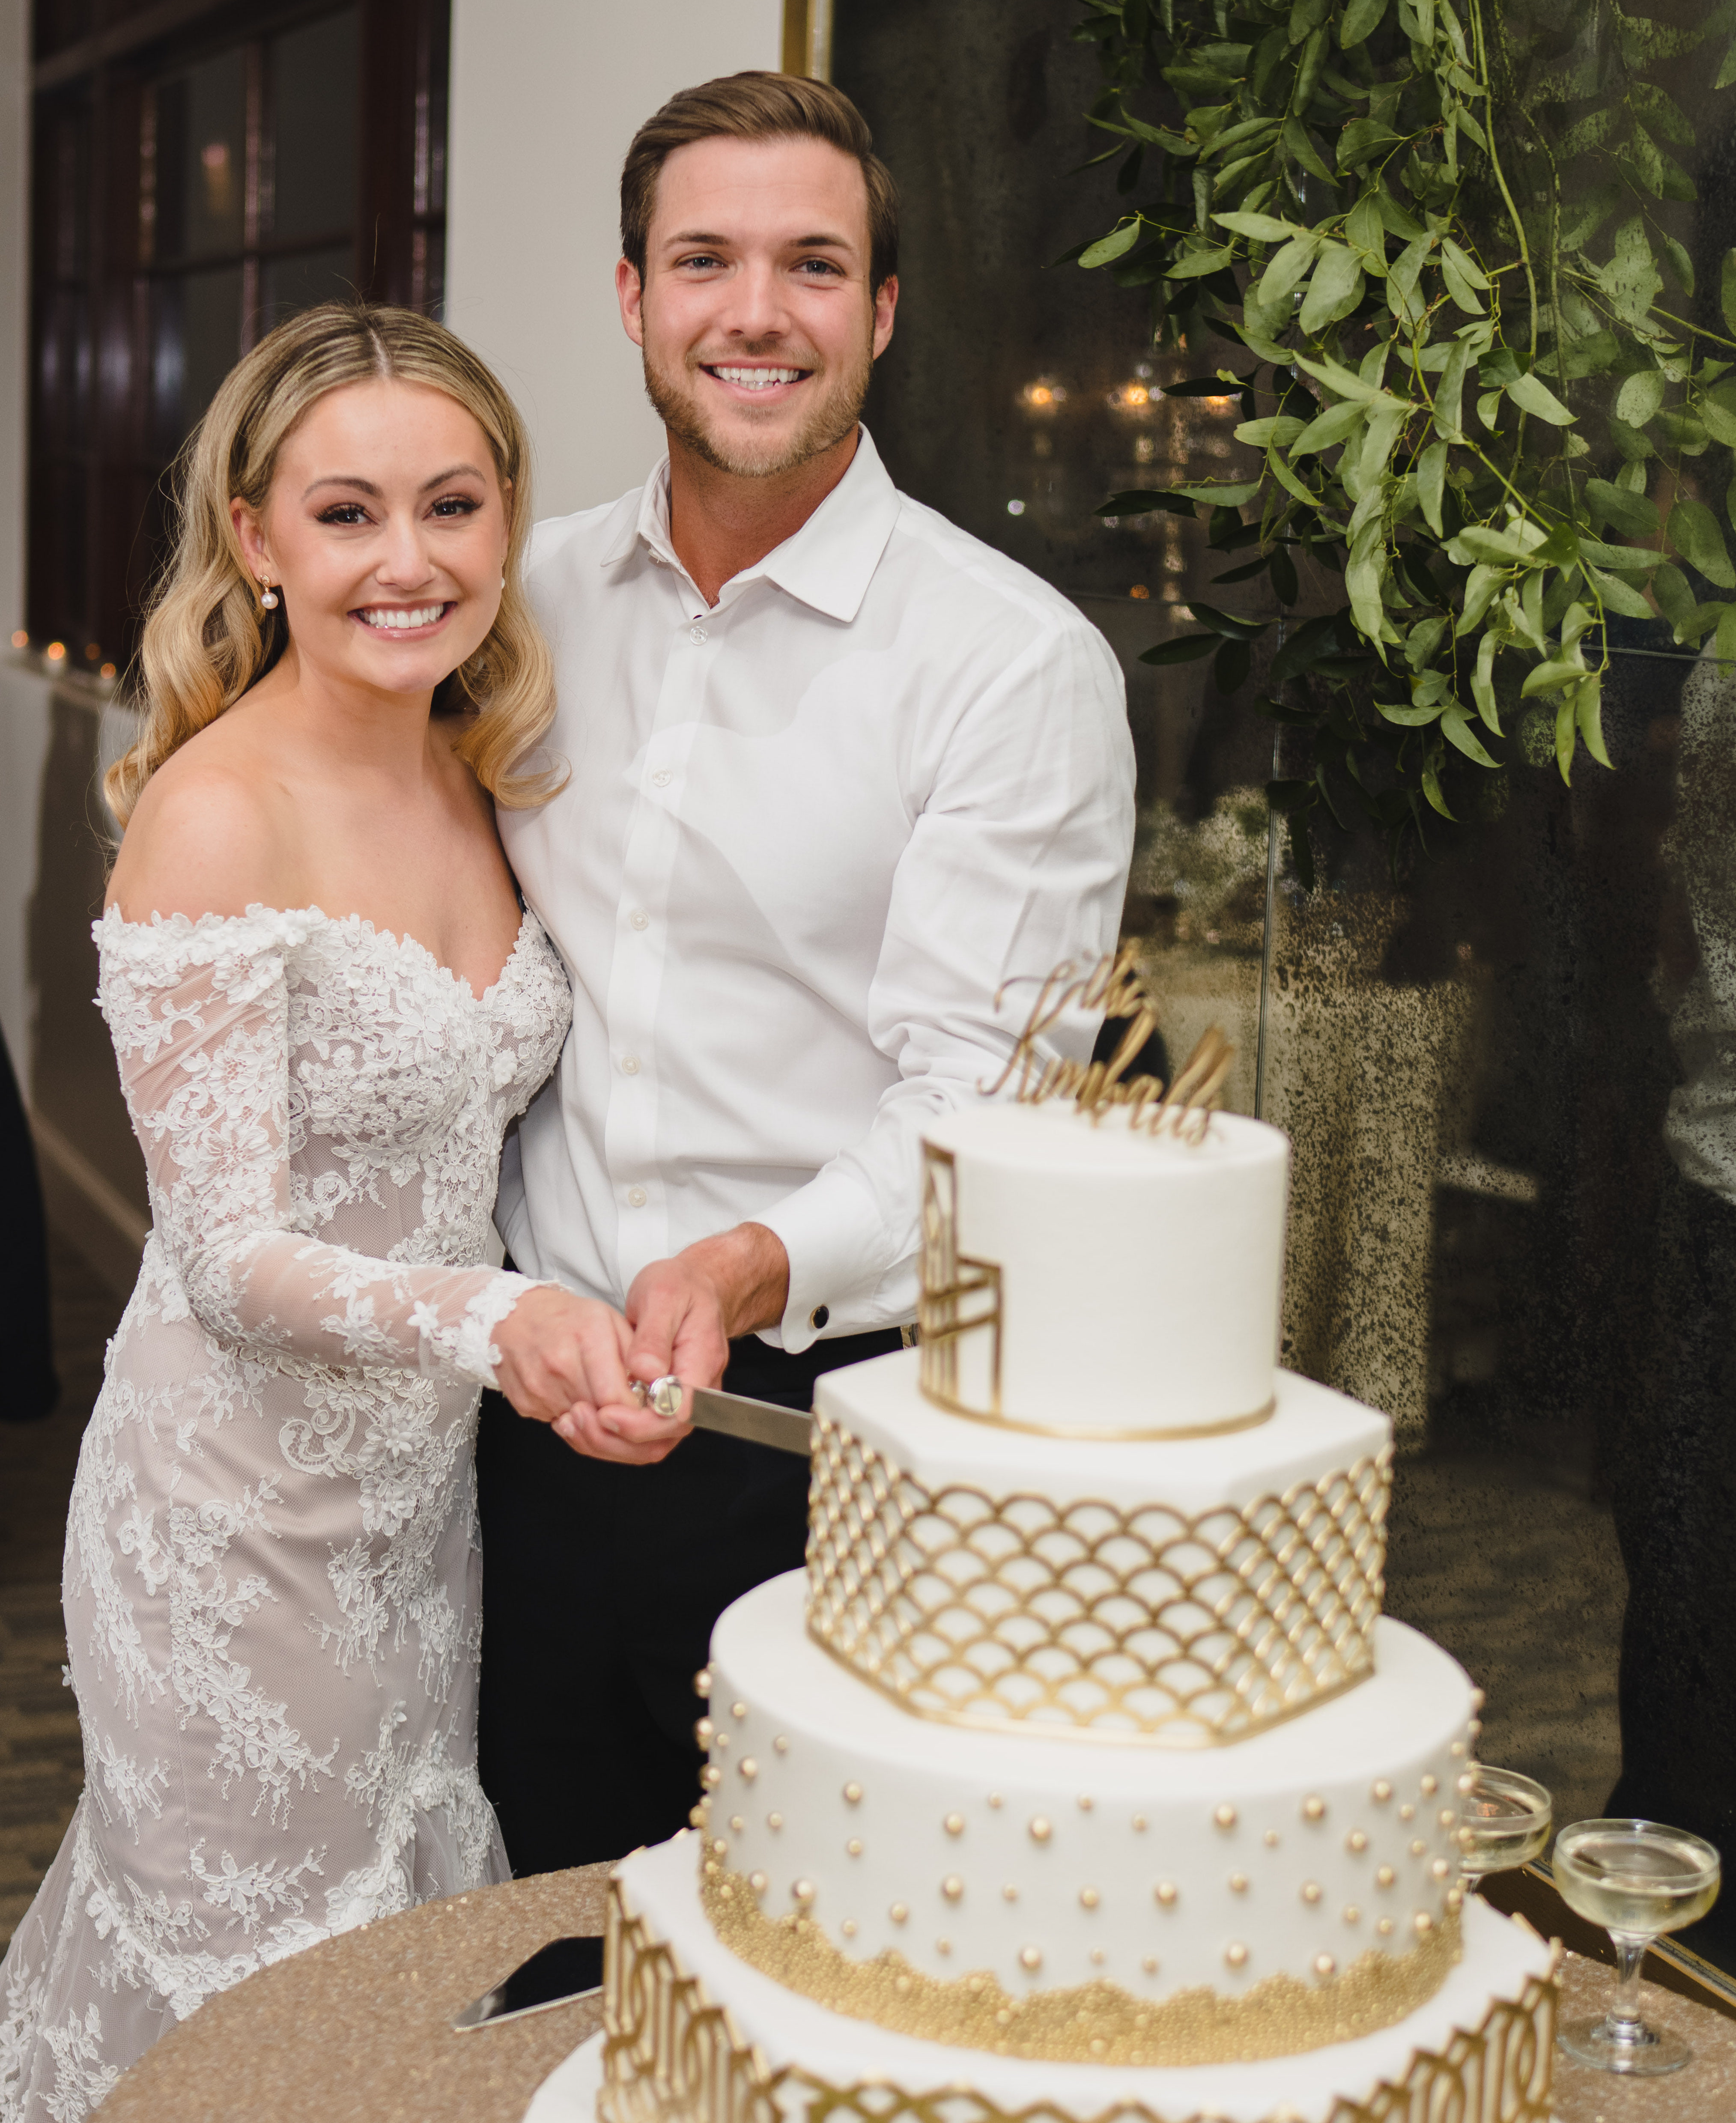 Jordan Kimball and Christina Creedon cut into their wedding cake at their reception in Houston, TX.